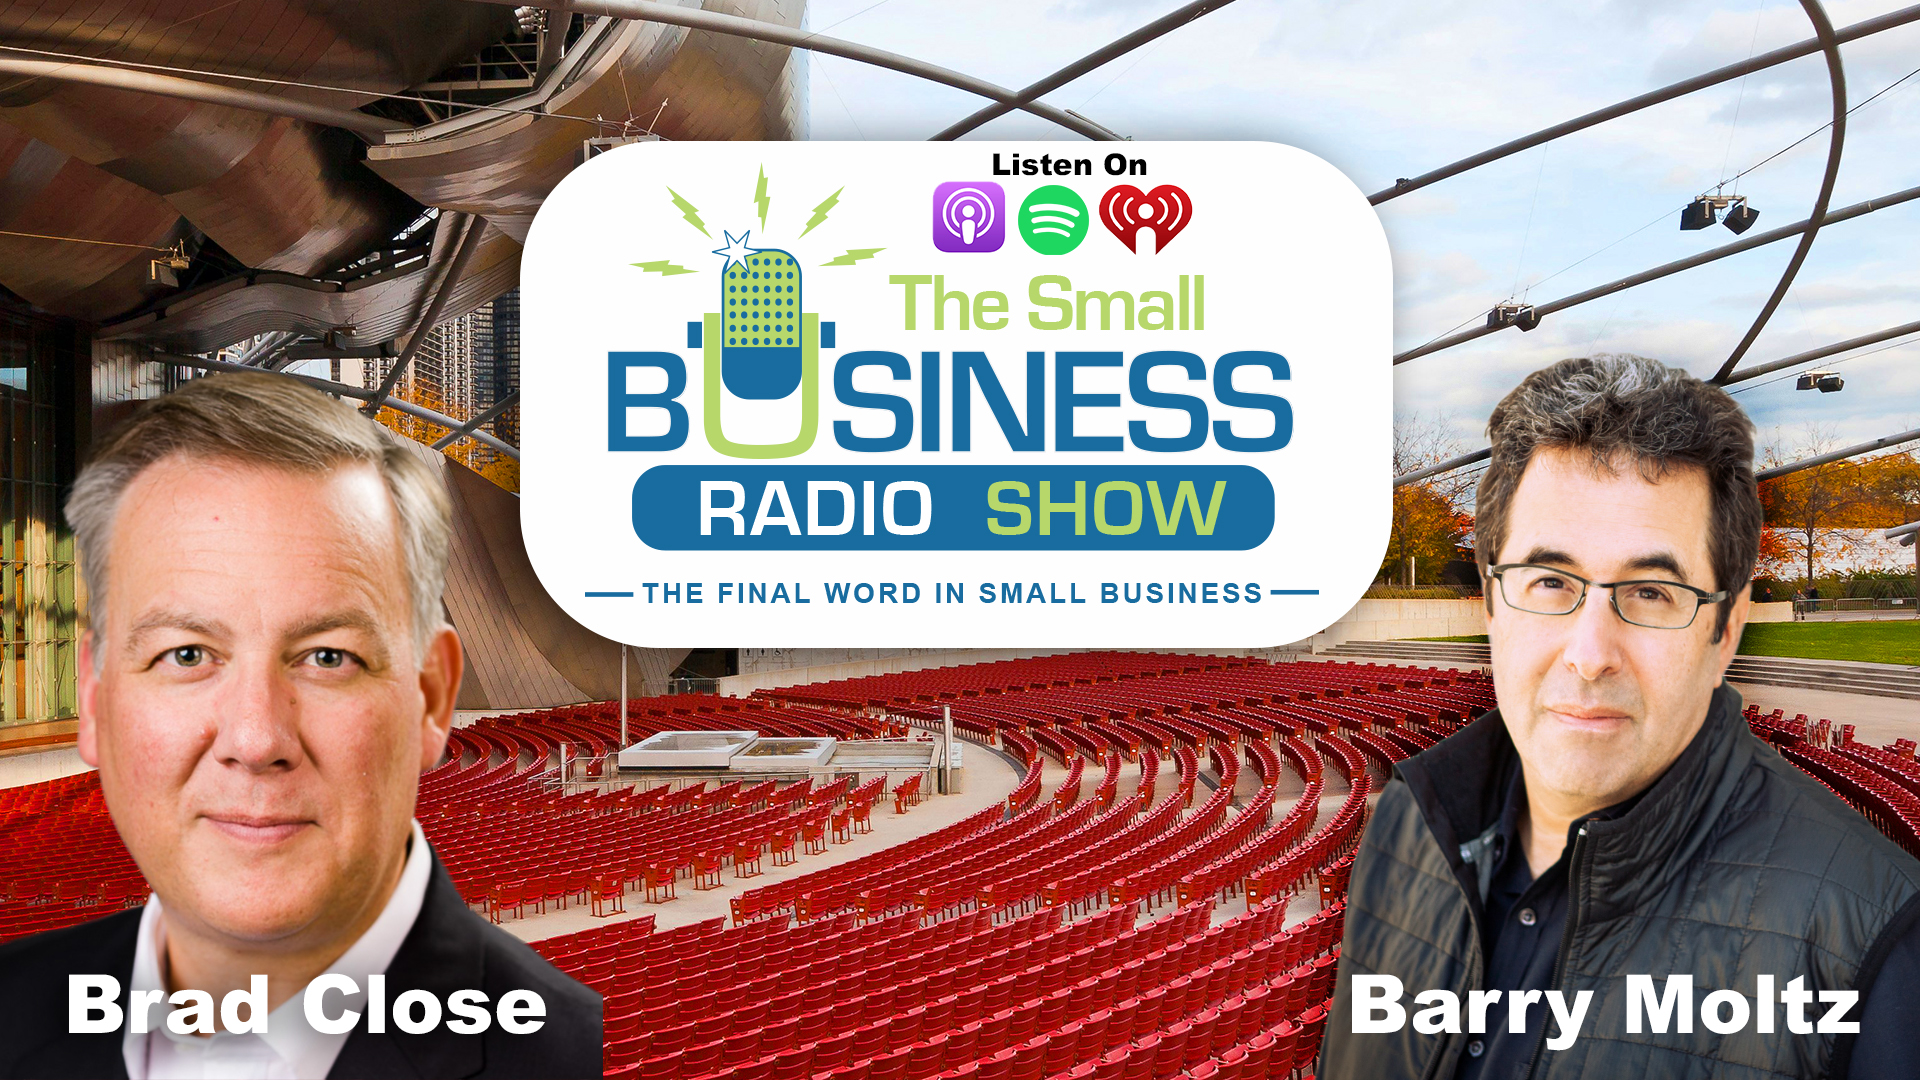 Brad Close on The Small Business Radio Show